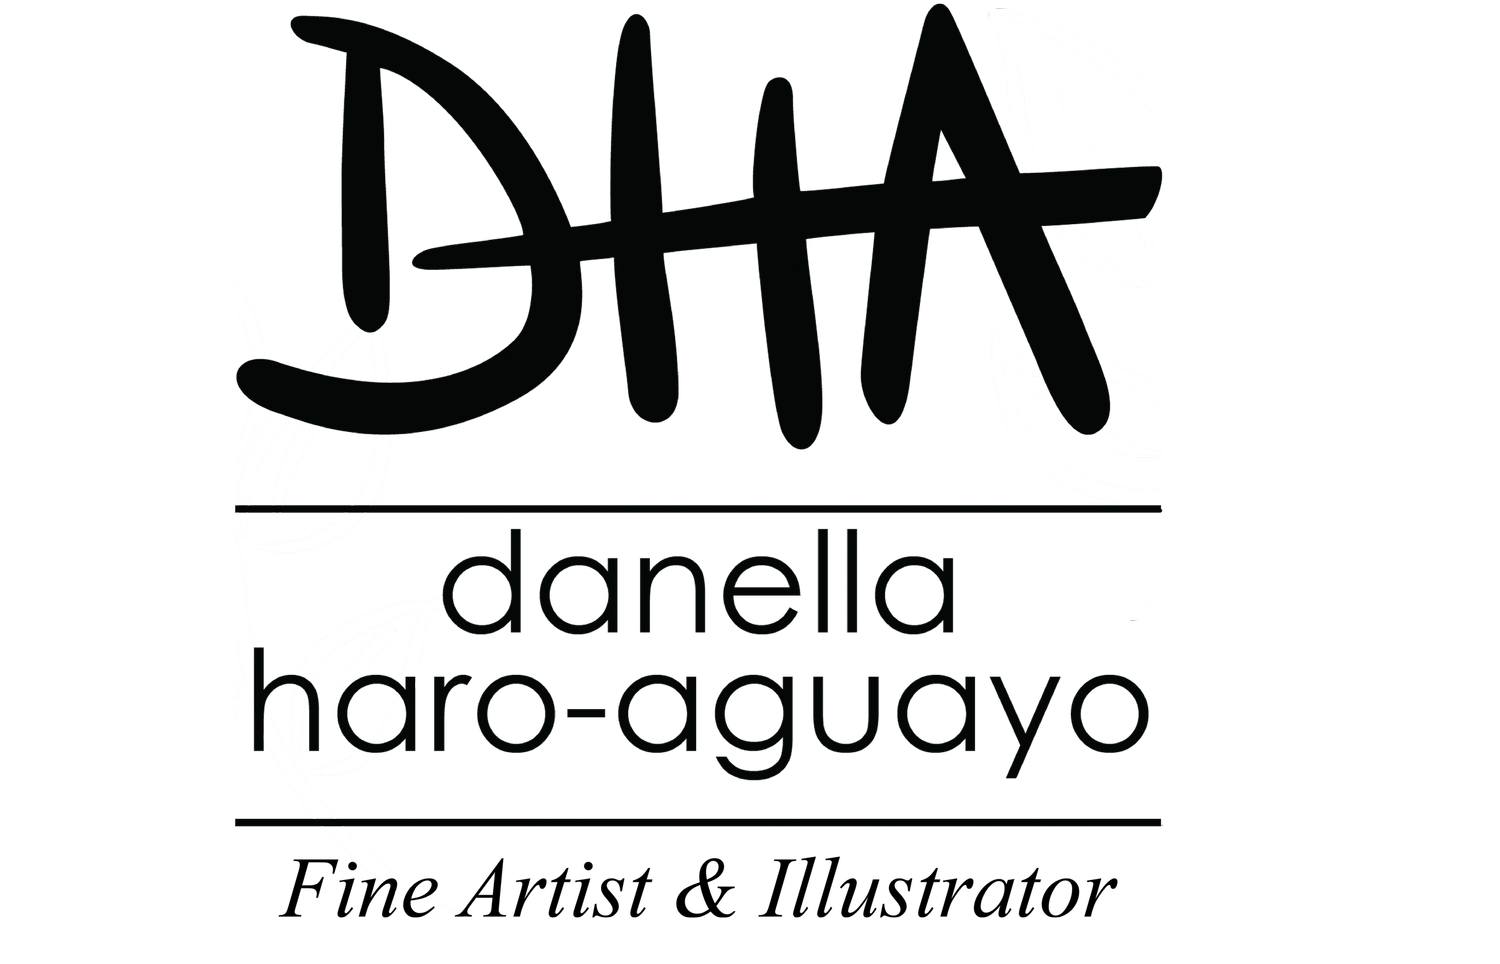 Danella Haro-Aguayo art